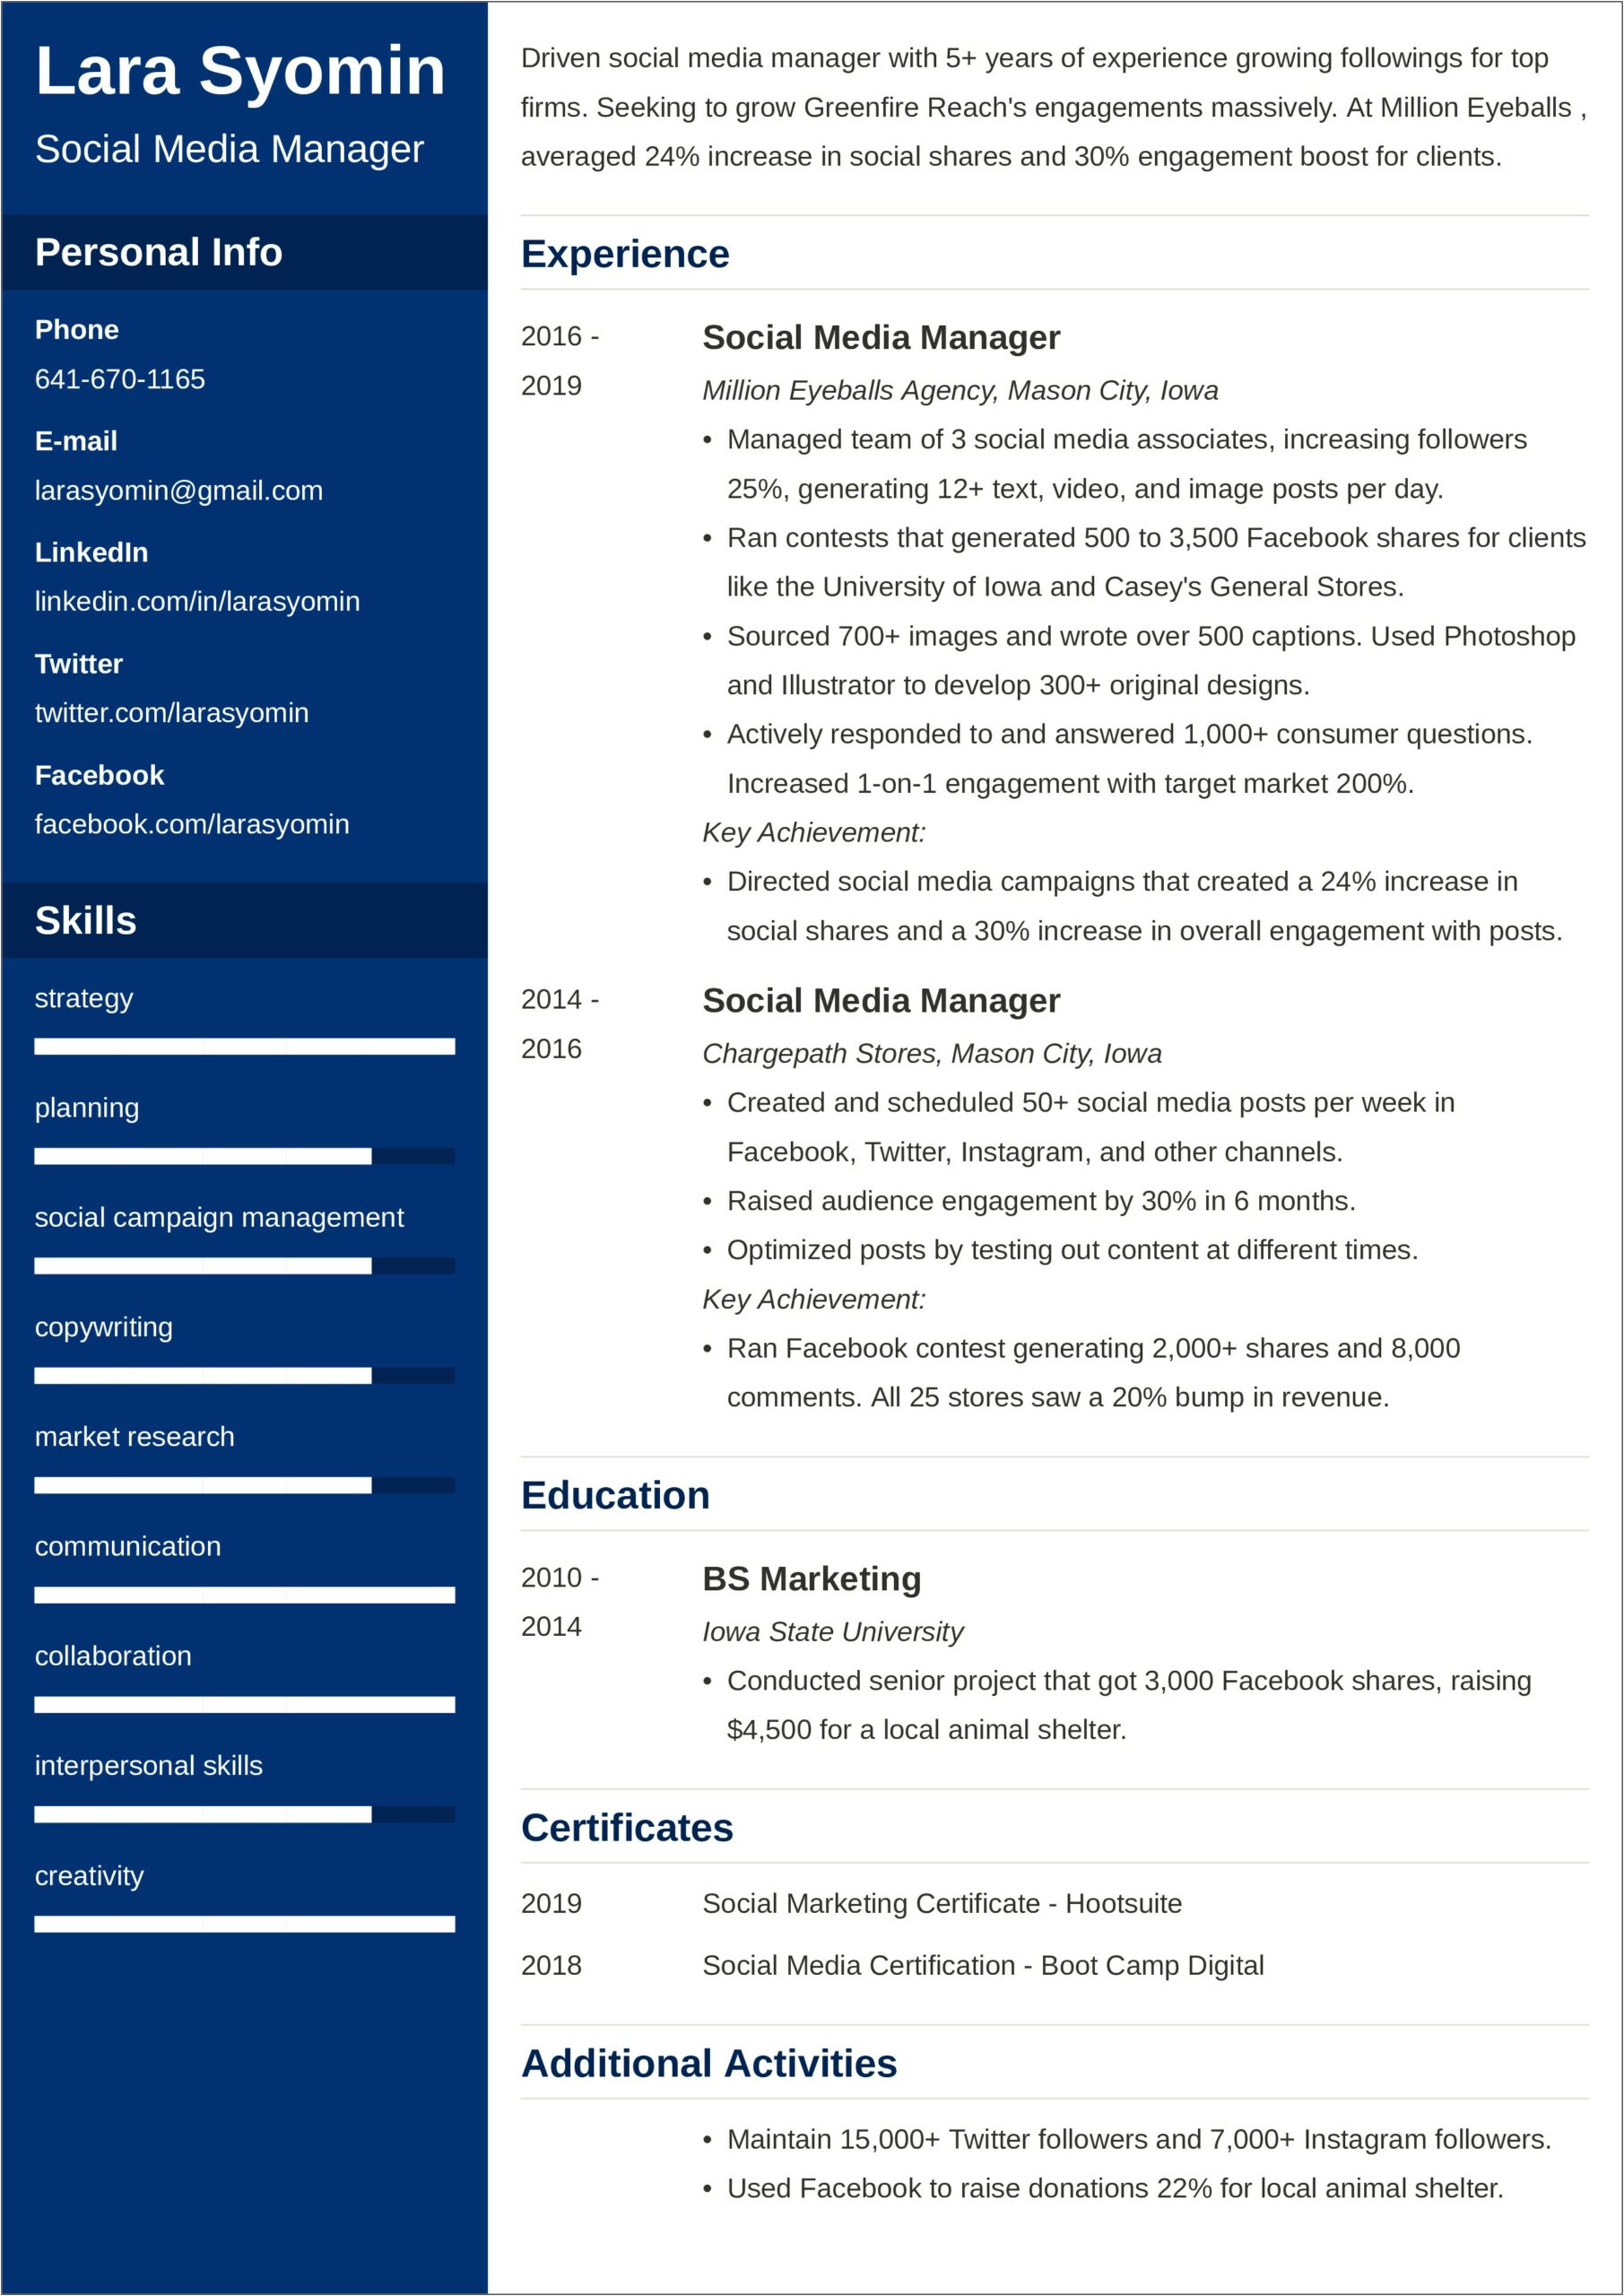 Agency Manager Job Description For Resume